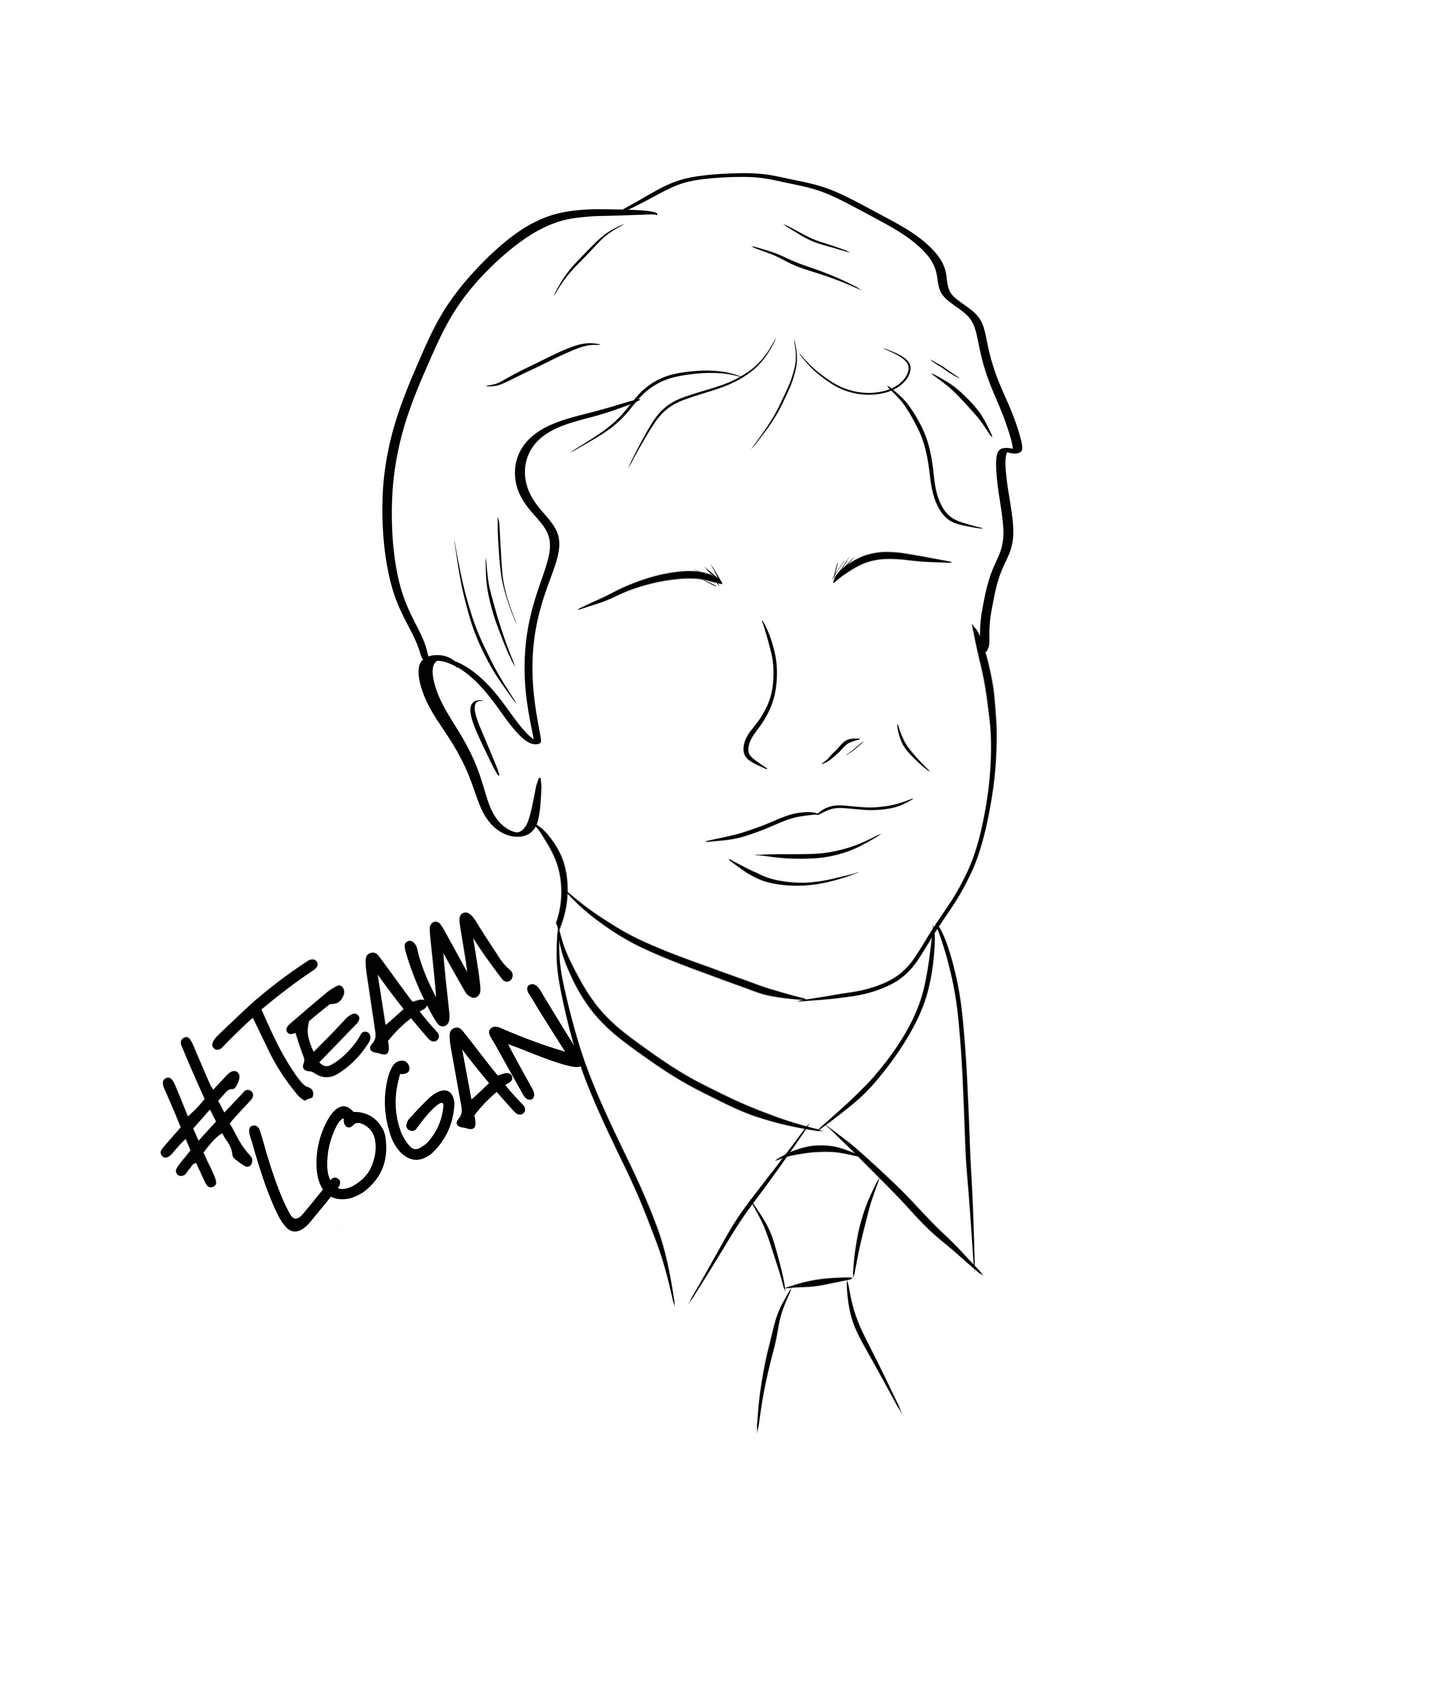 #TeamLogan